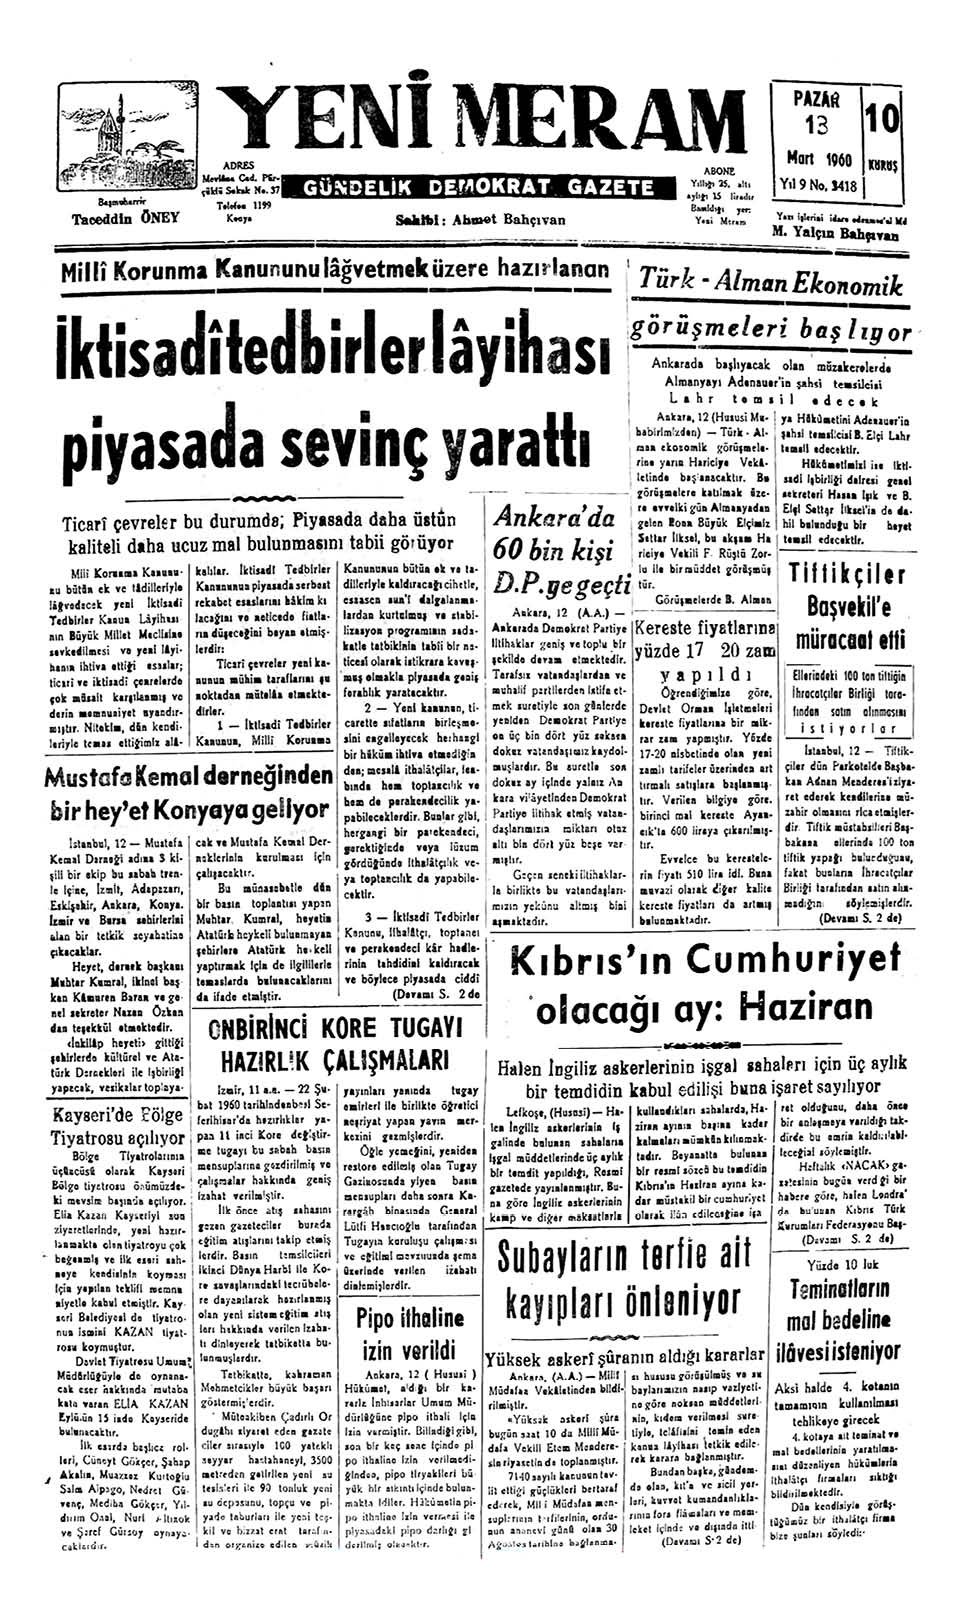 13 Mart 2023 Yeni Meram Gazetesi
